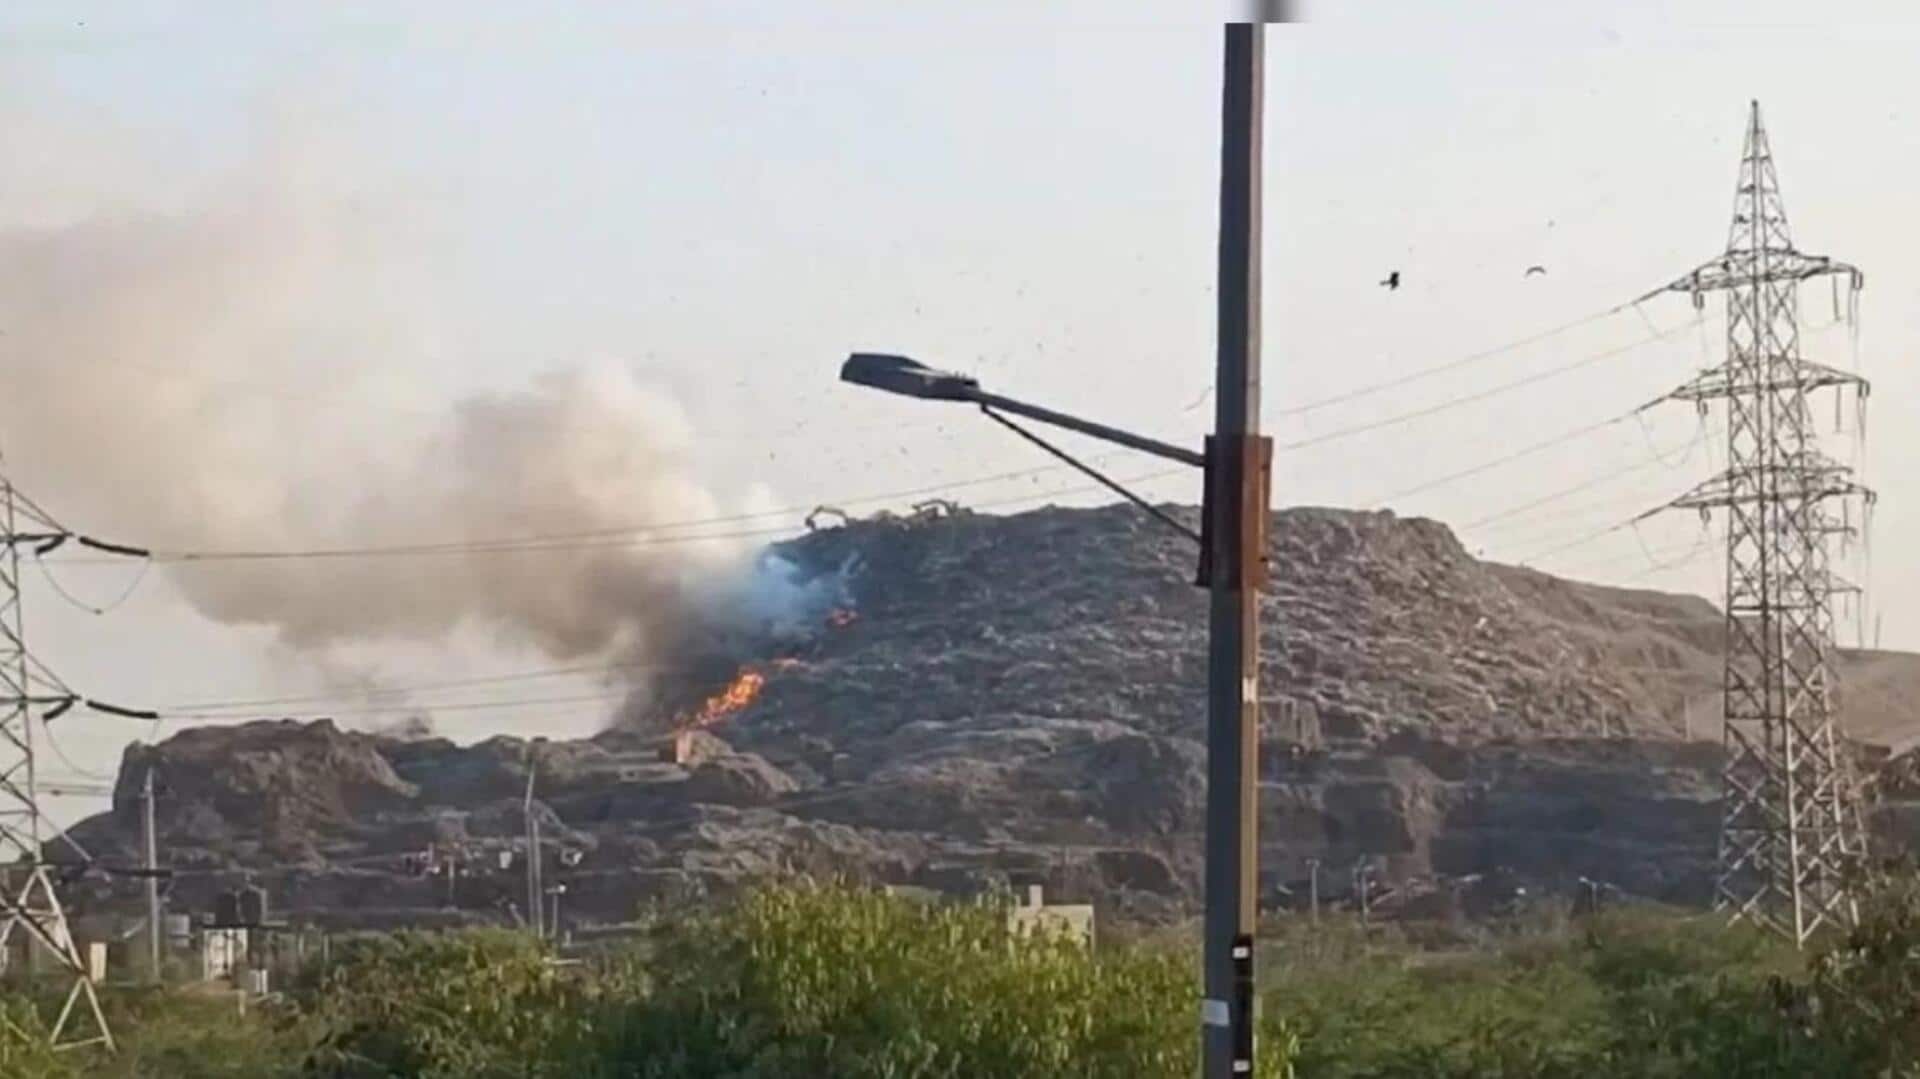 Ghazipur landfill fire ignites political tensions in Delhi